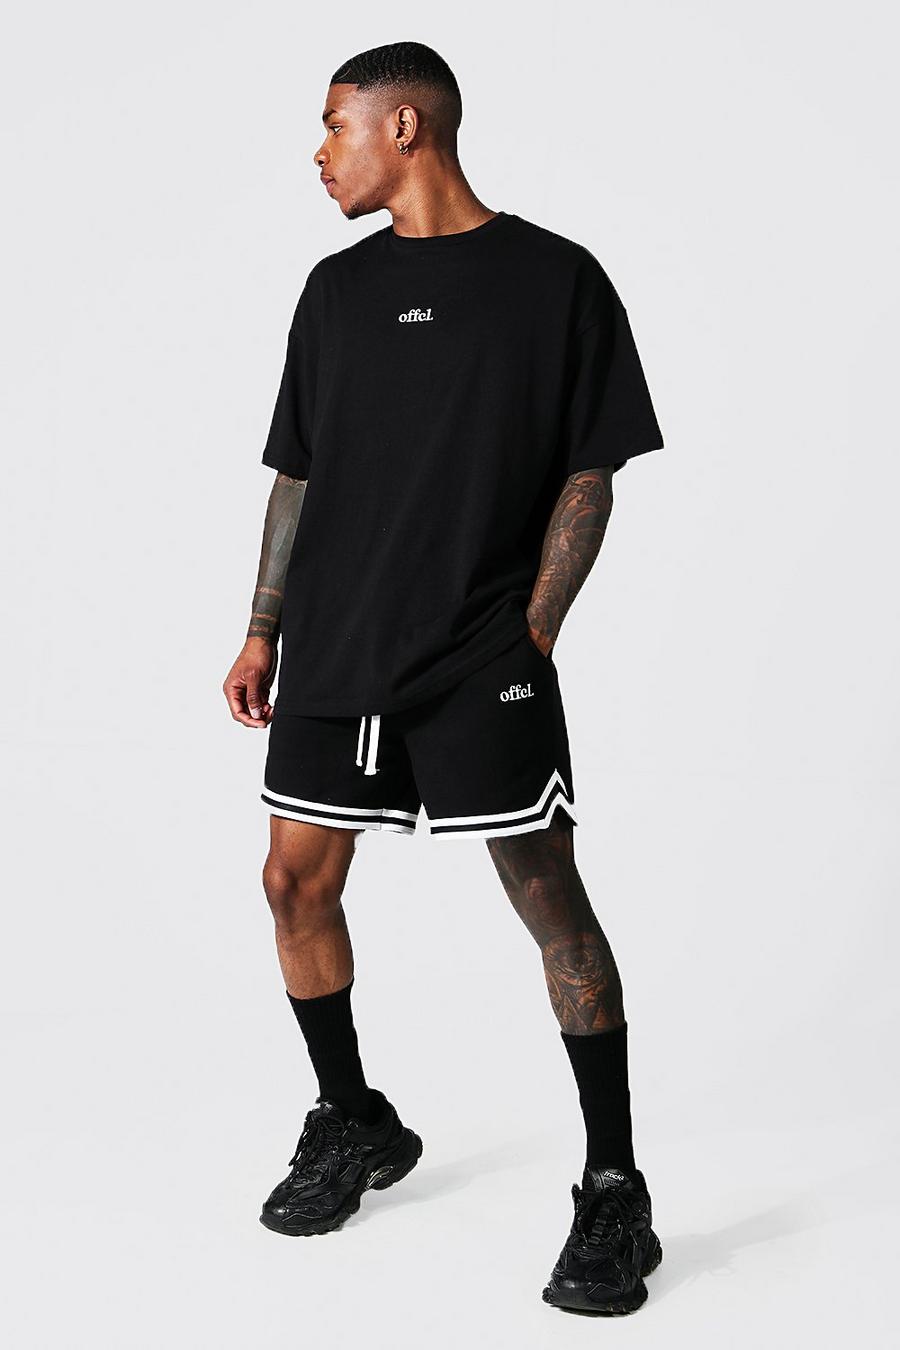 Black Oversized Offcl T-shirt & Basketball Short image number 1